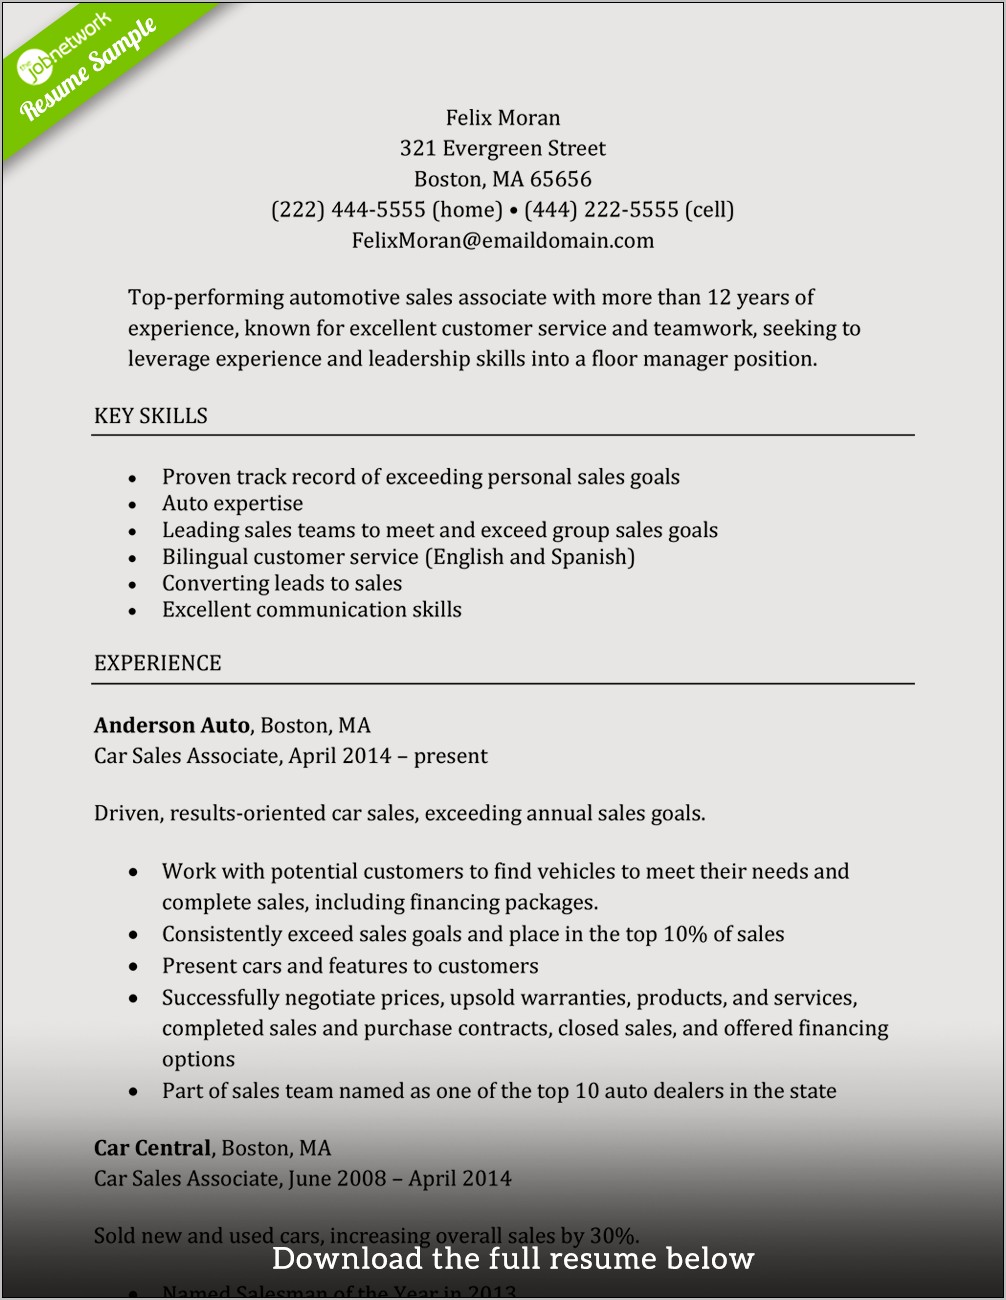 Job Description For Resume Sales Associate